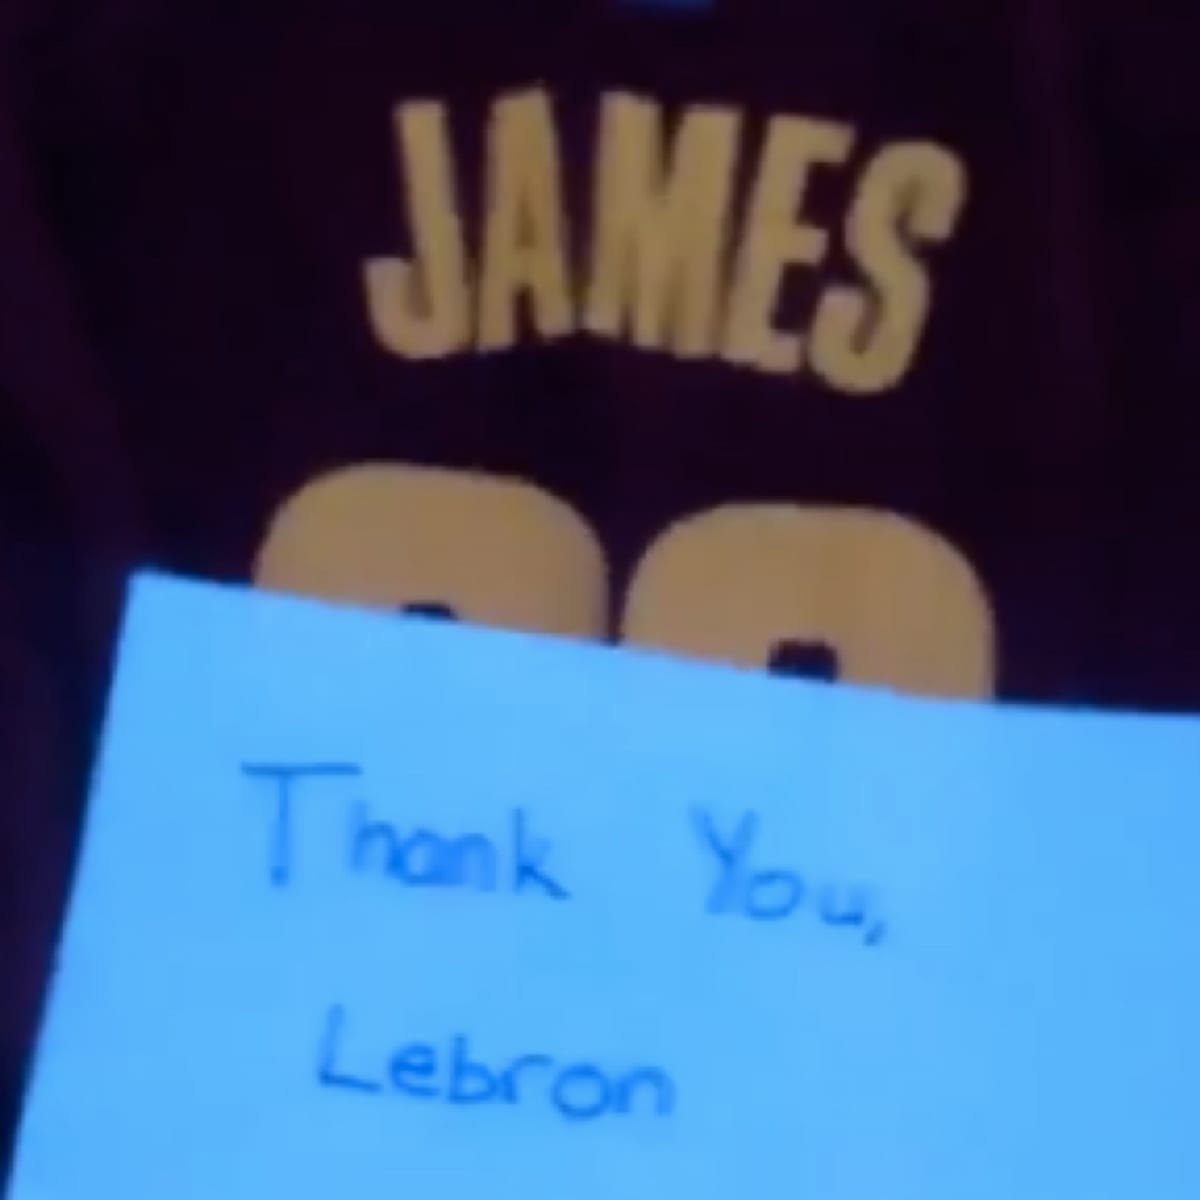 Cleveland Cavaliers fan sets himself on fire burning LeBron James jersey